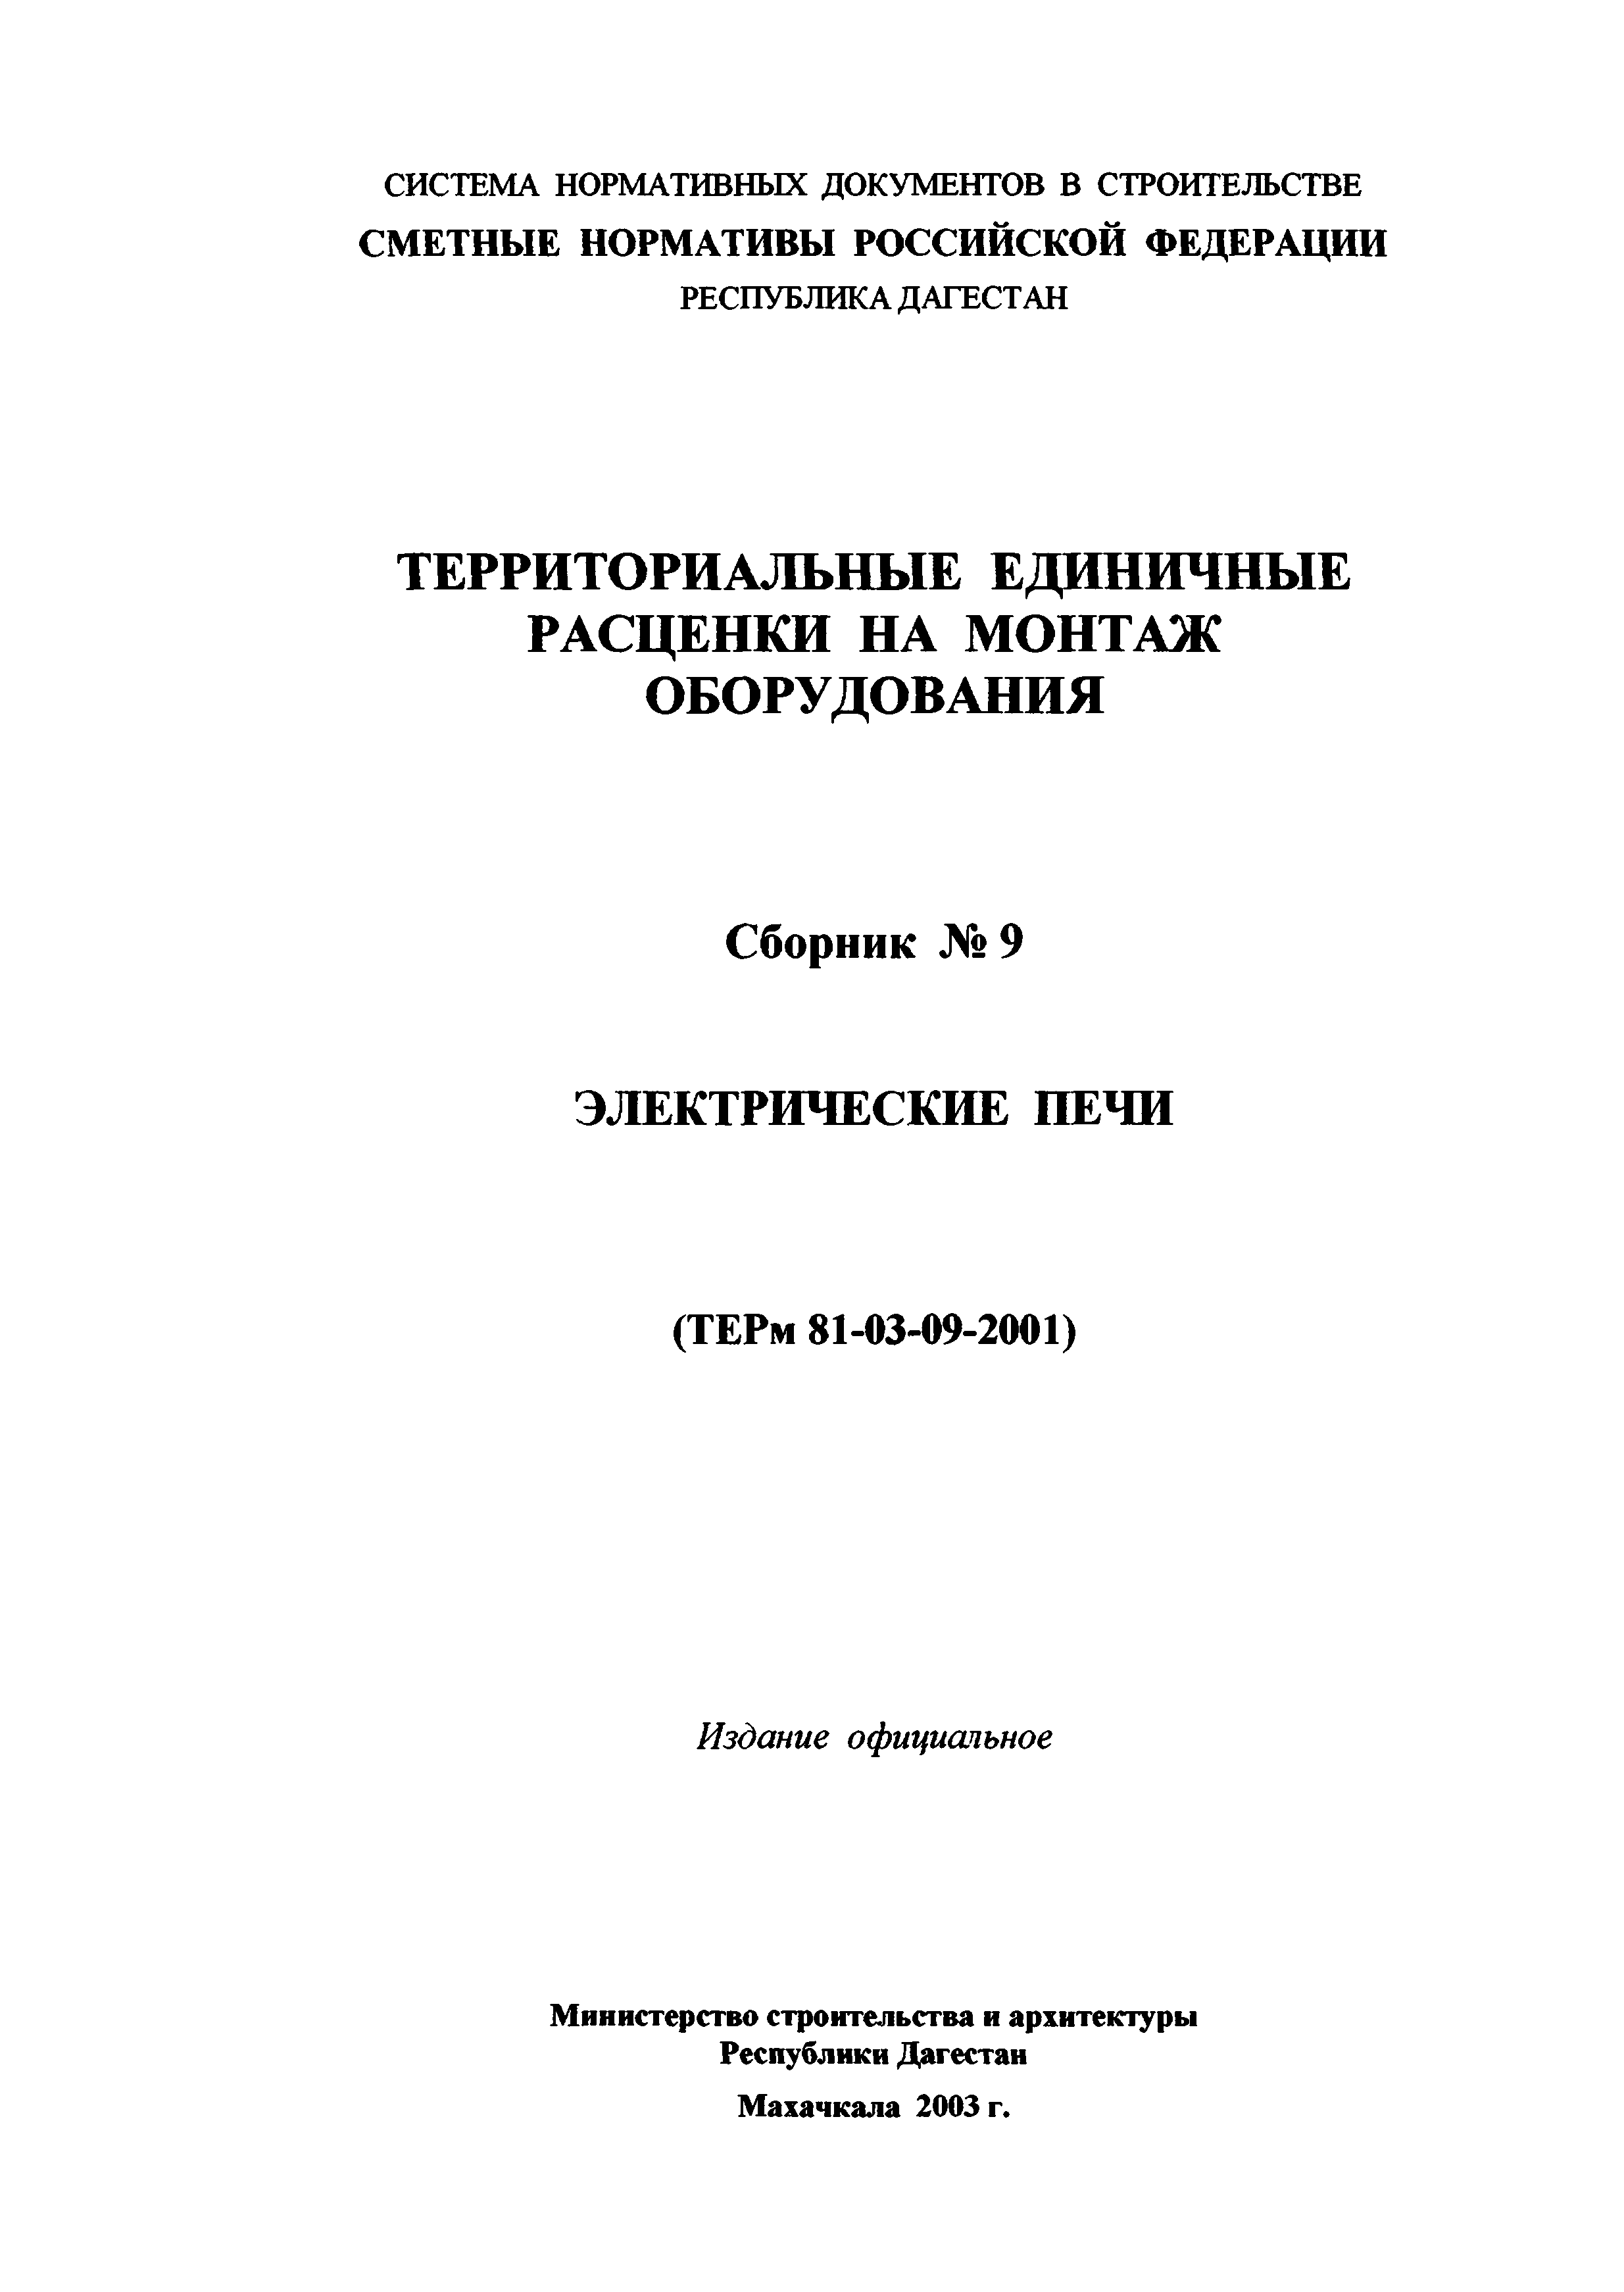 ТЕРм Республика Дагестан 2001-09